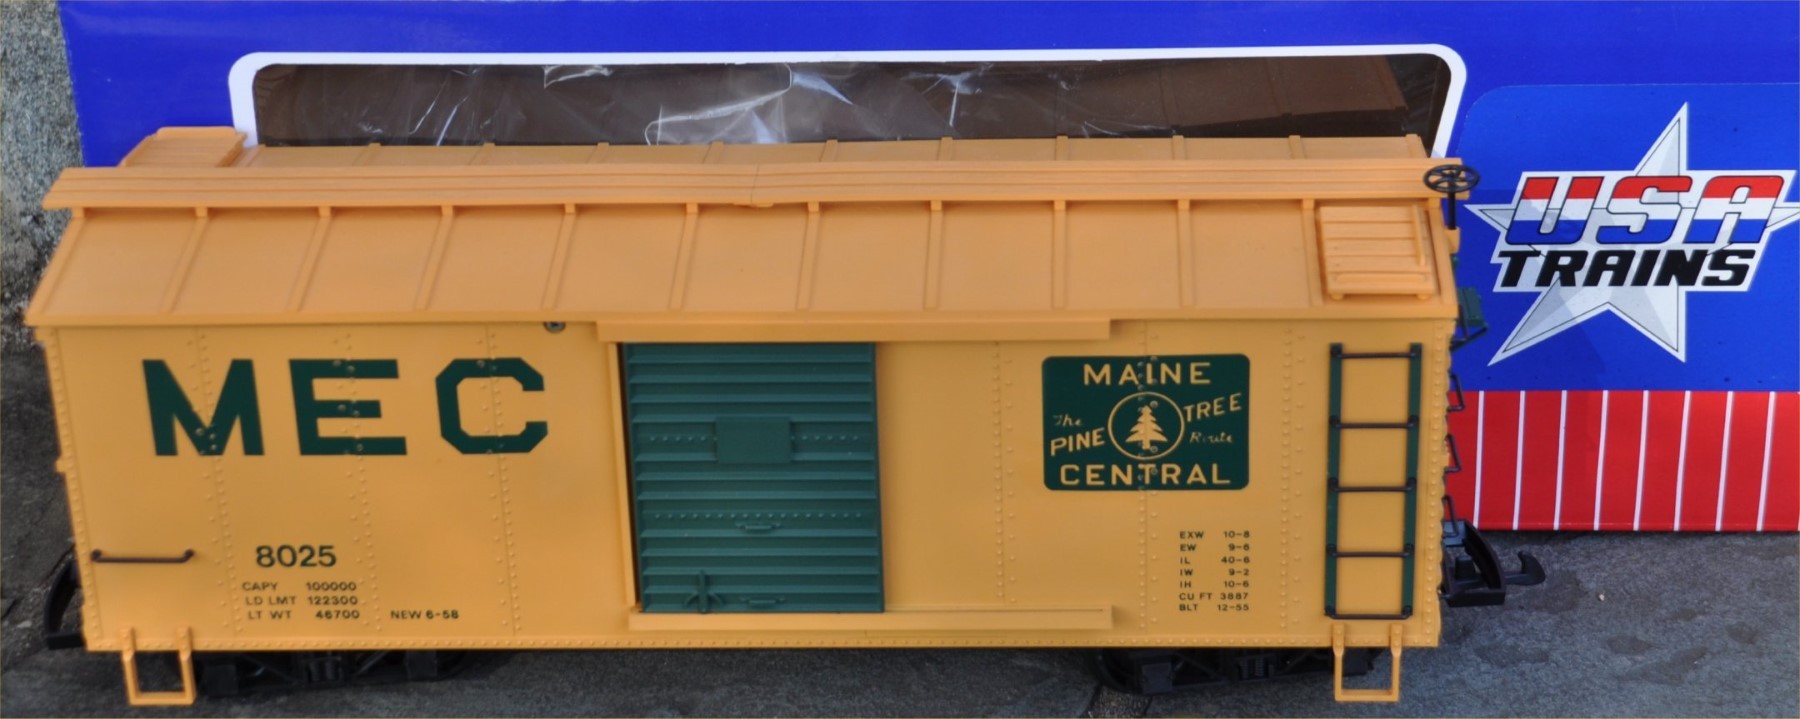 R1970 Maine Central MEC 8025